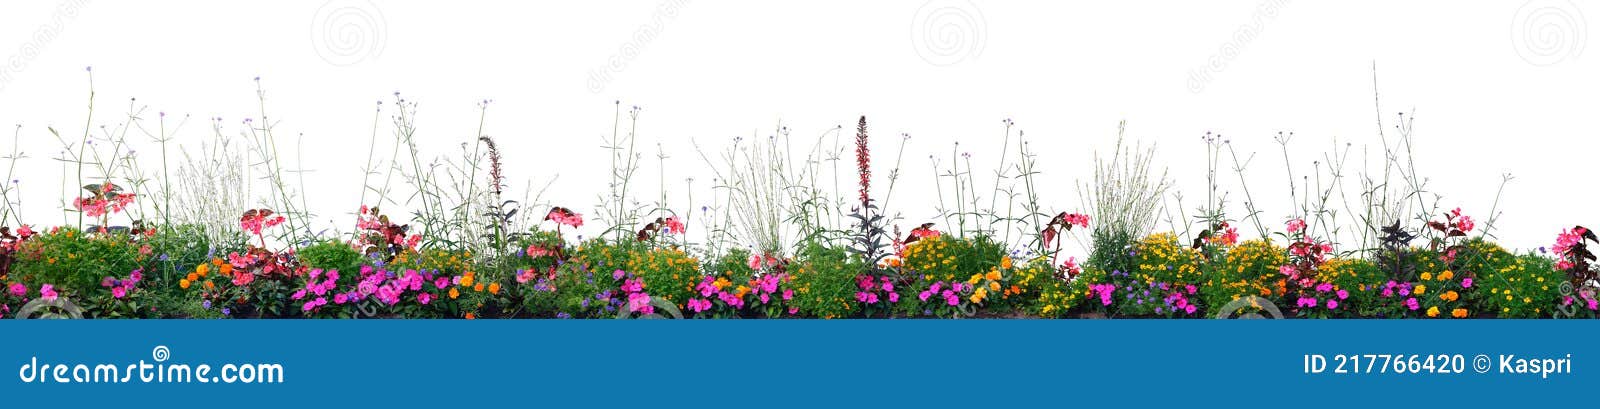 annual flowers flowerbed panorama,  horizontal panoramic blooming cardinal flower bed closeup, flowering begonias, balsams